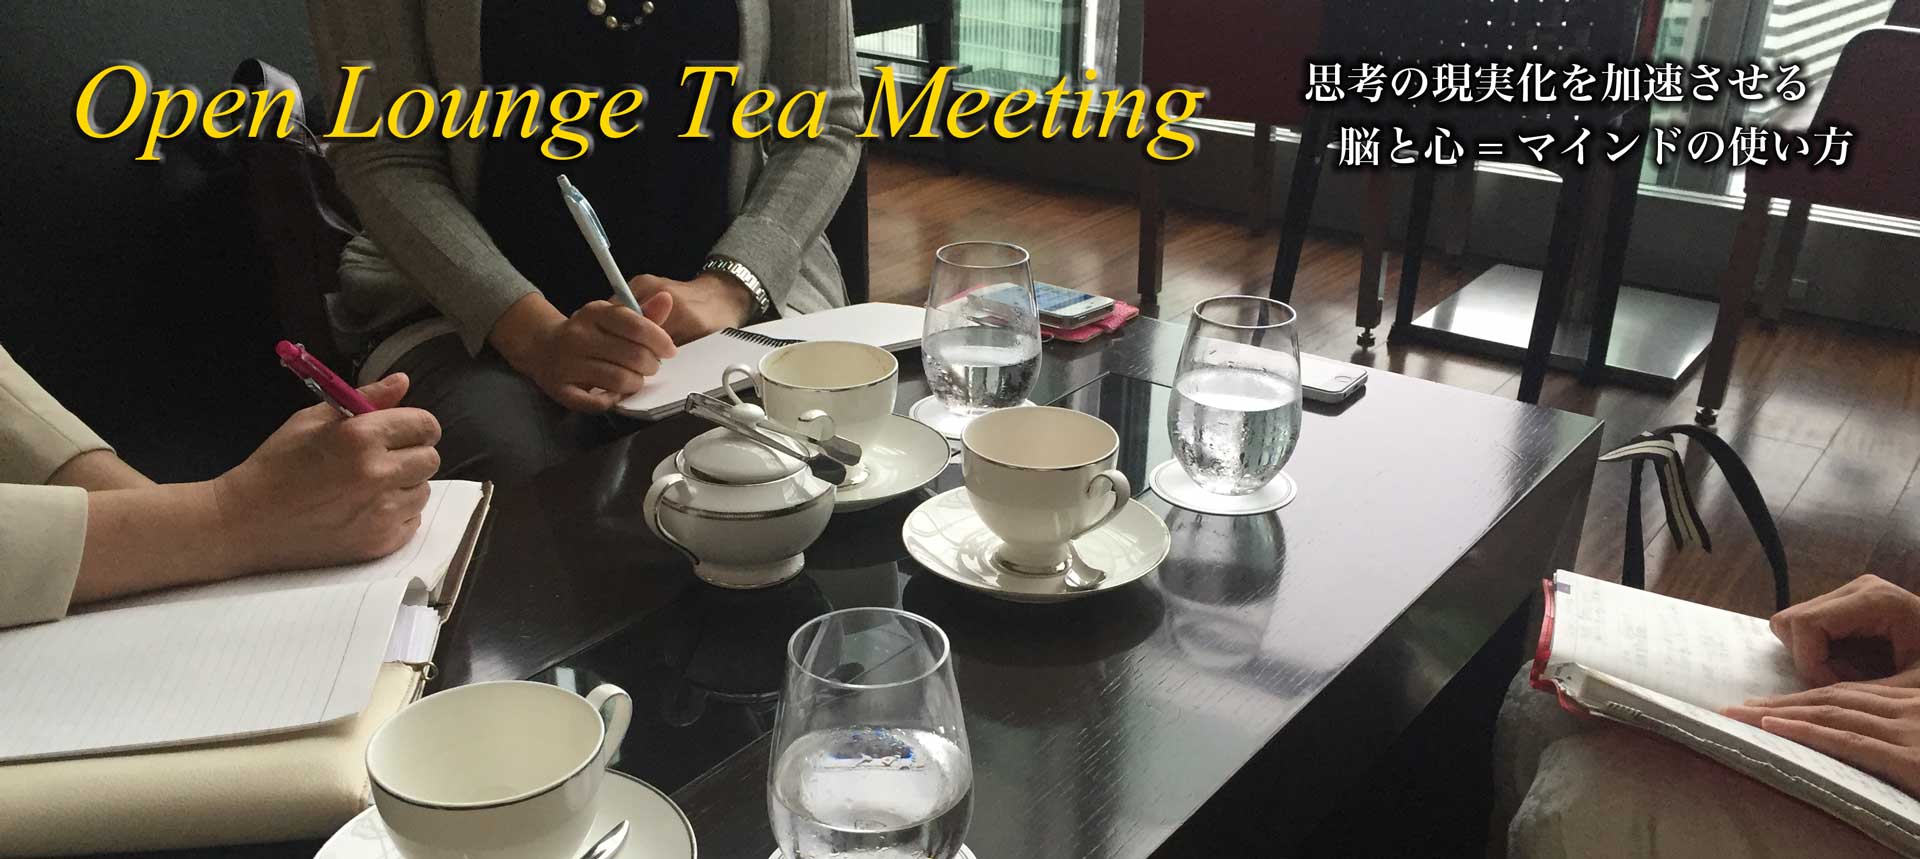 Lounge Tea Meeting